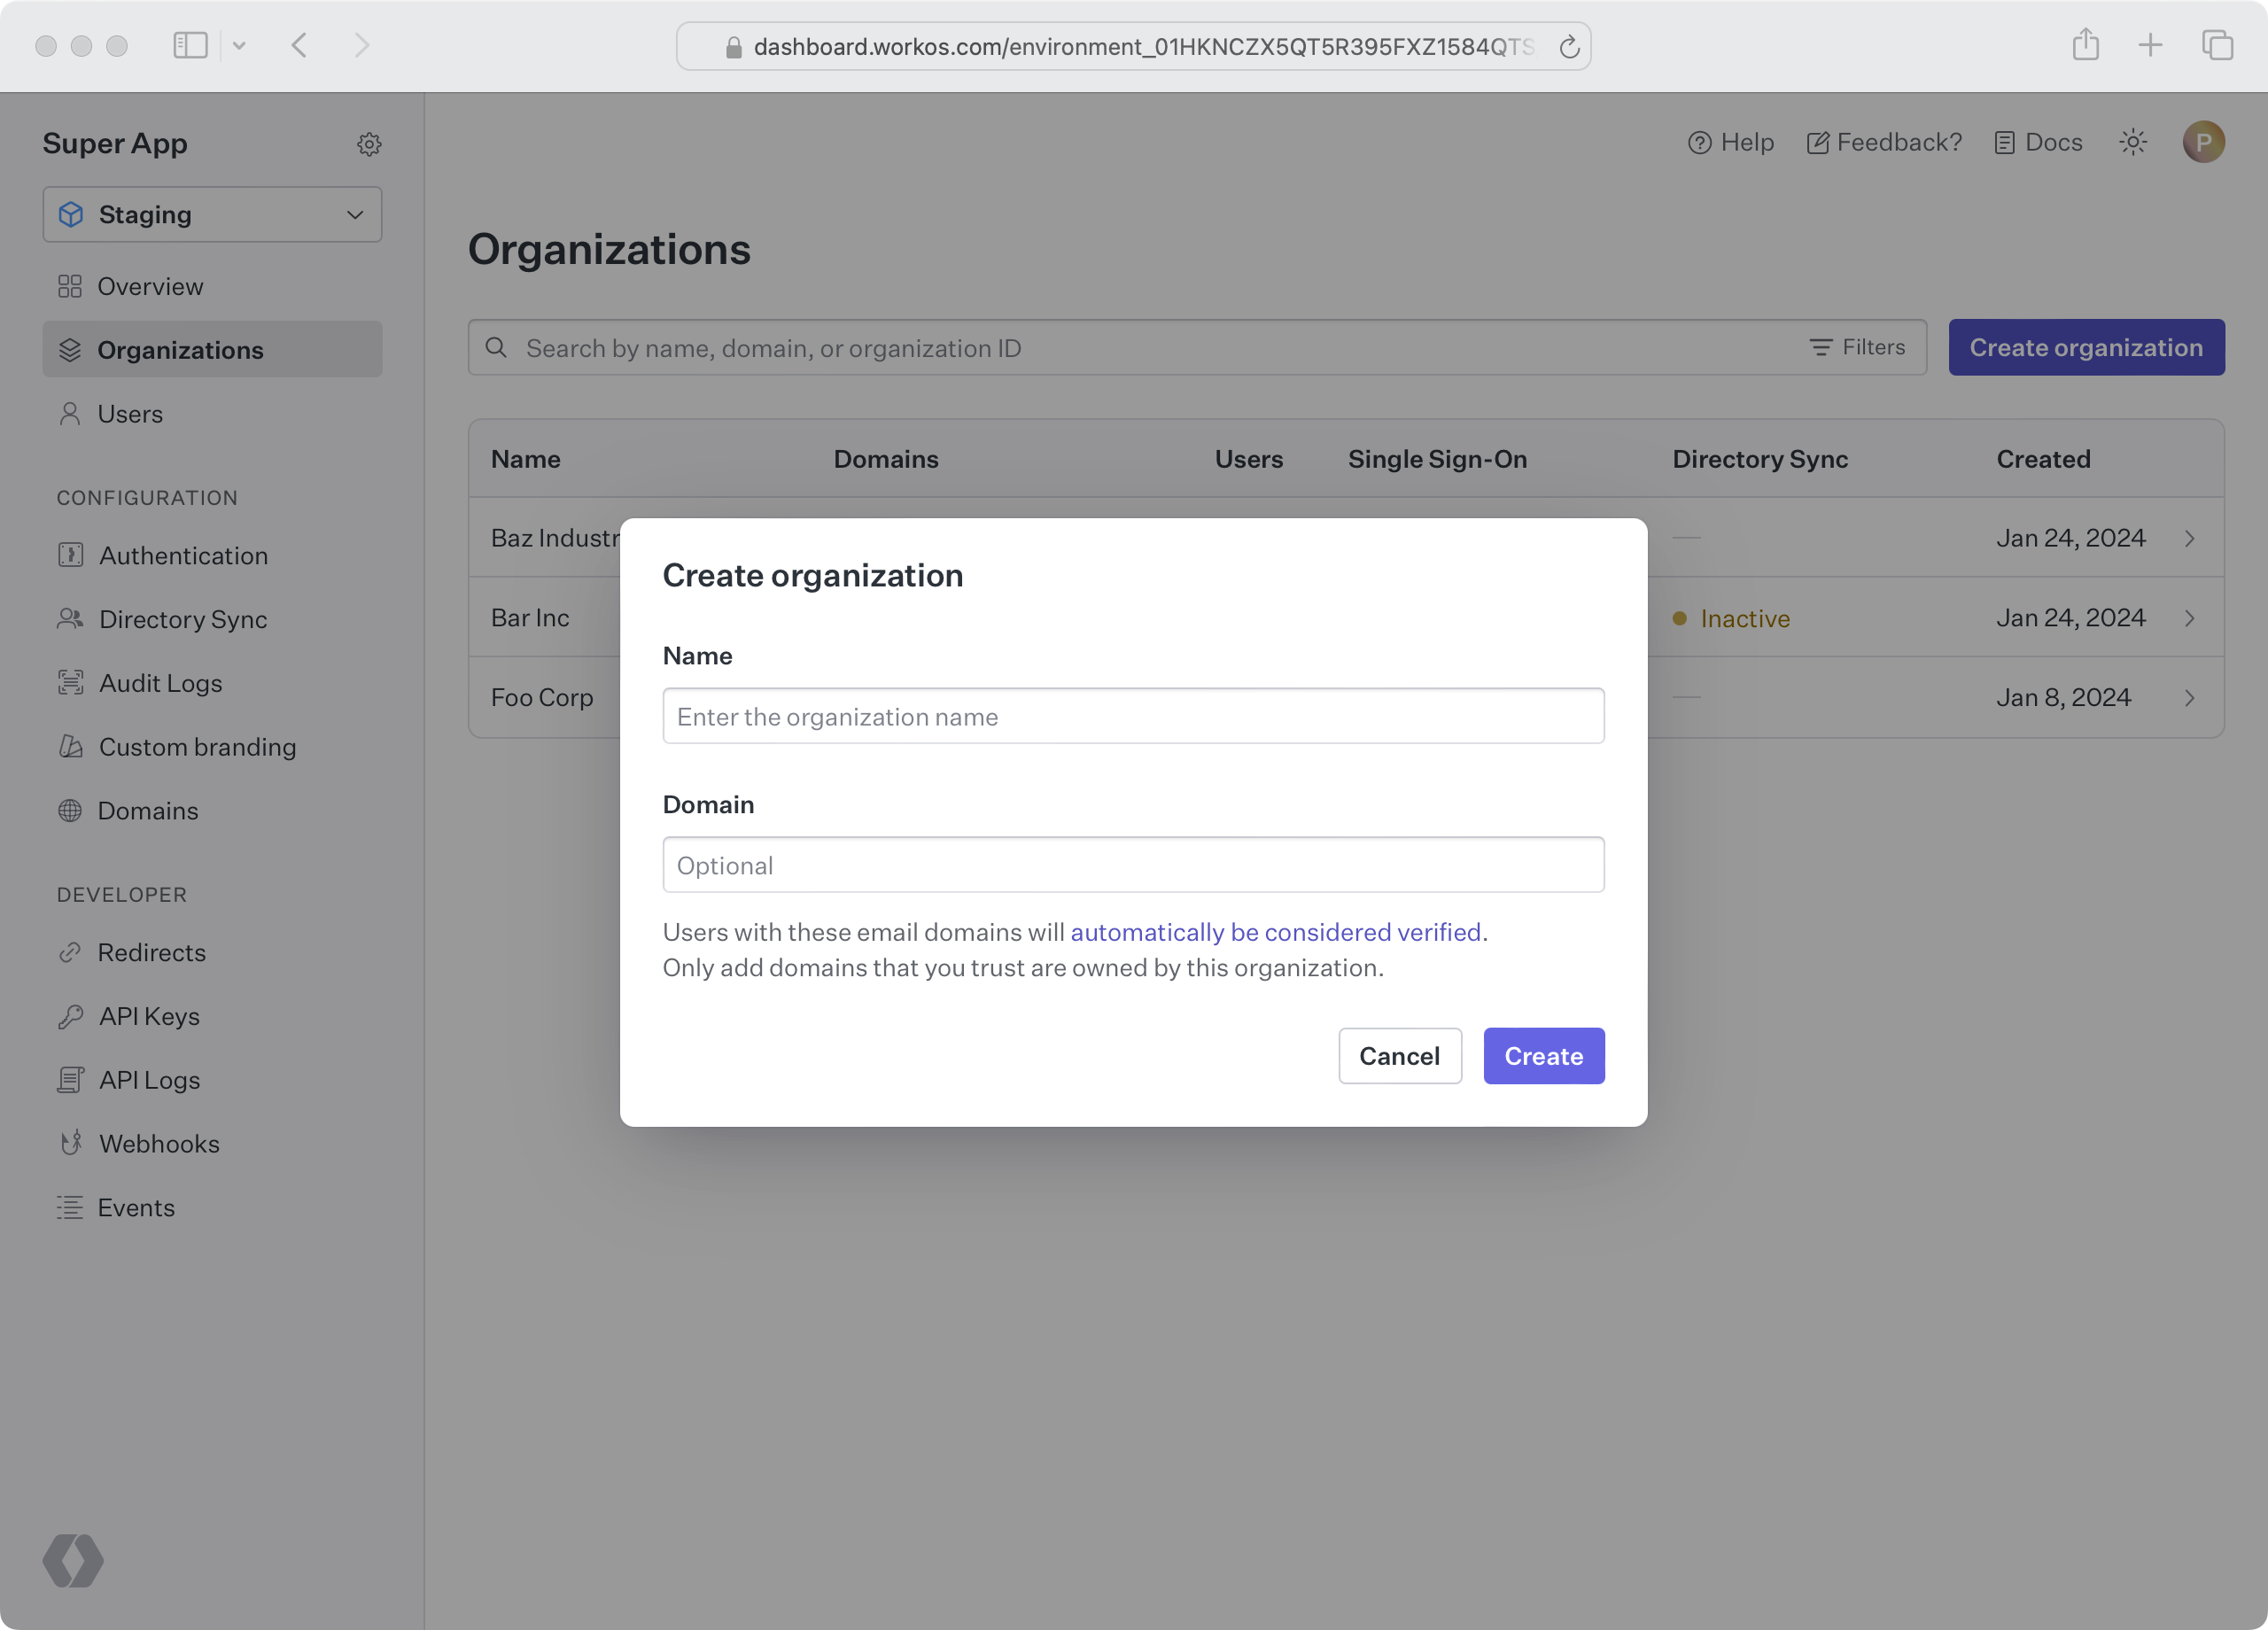 WorkOS Dashboard UI showing organization creation